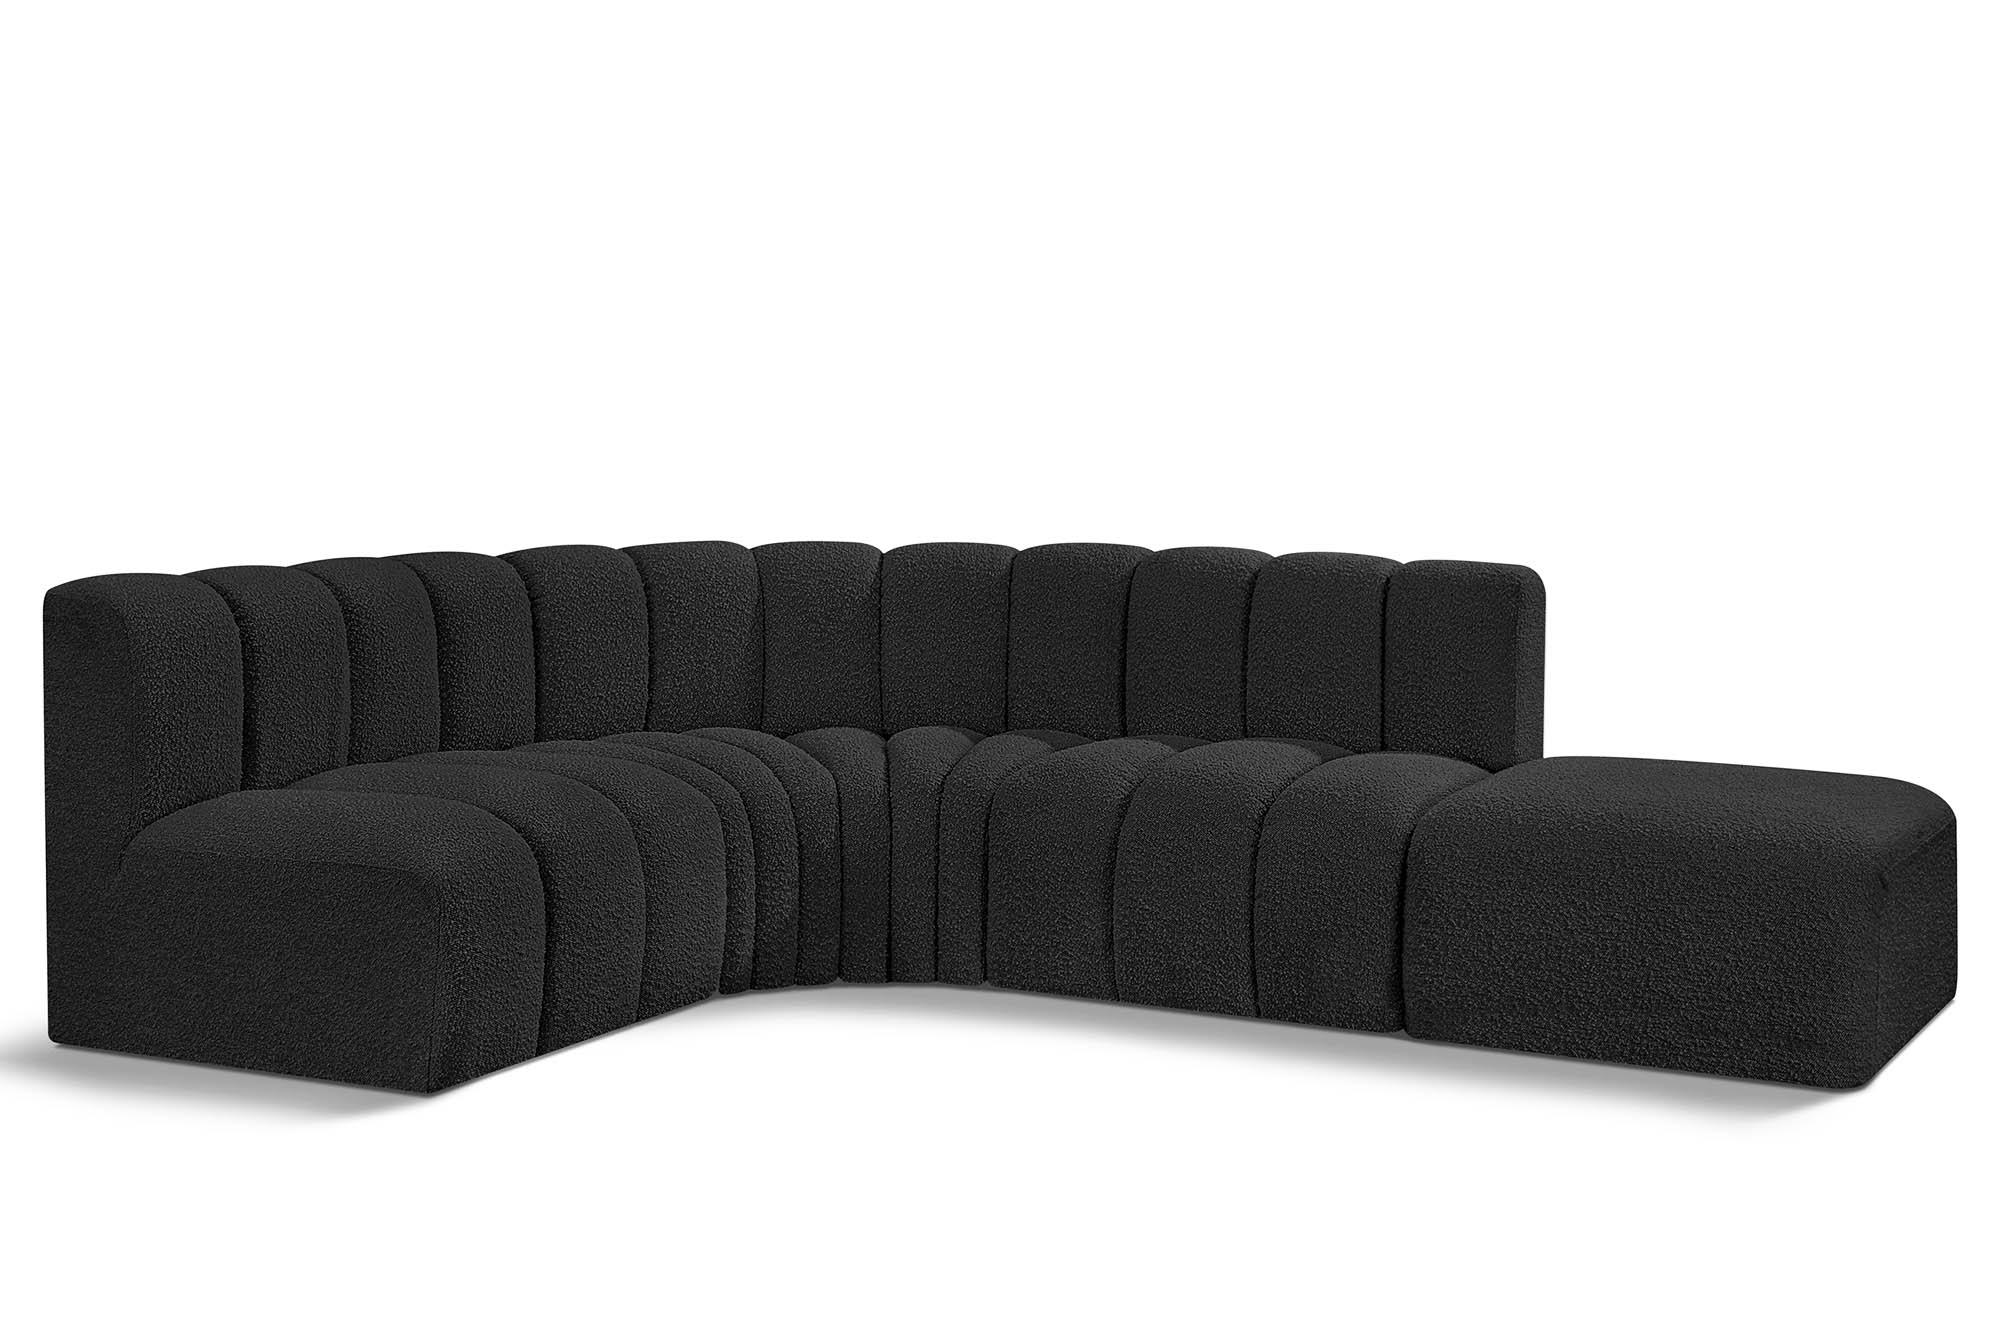 Contemporary, Modern Modular Sectional Sofa ARC 102Black-S5C 102Black-S5C in Black 